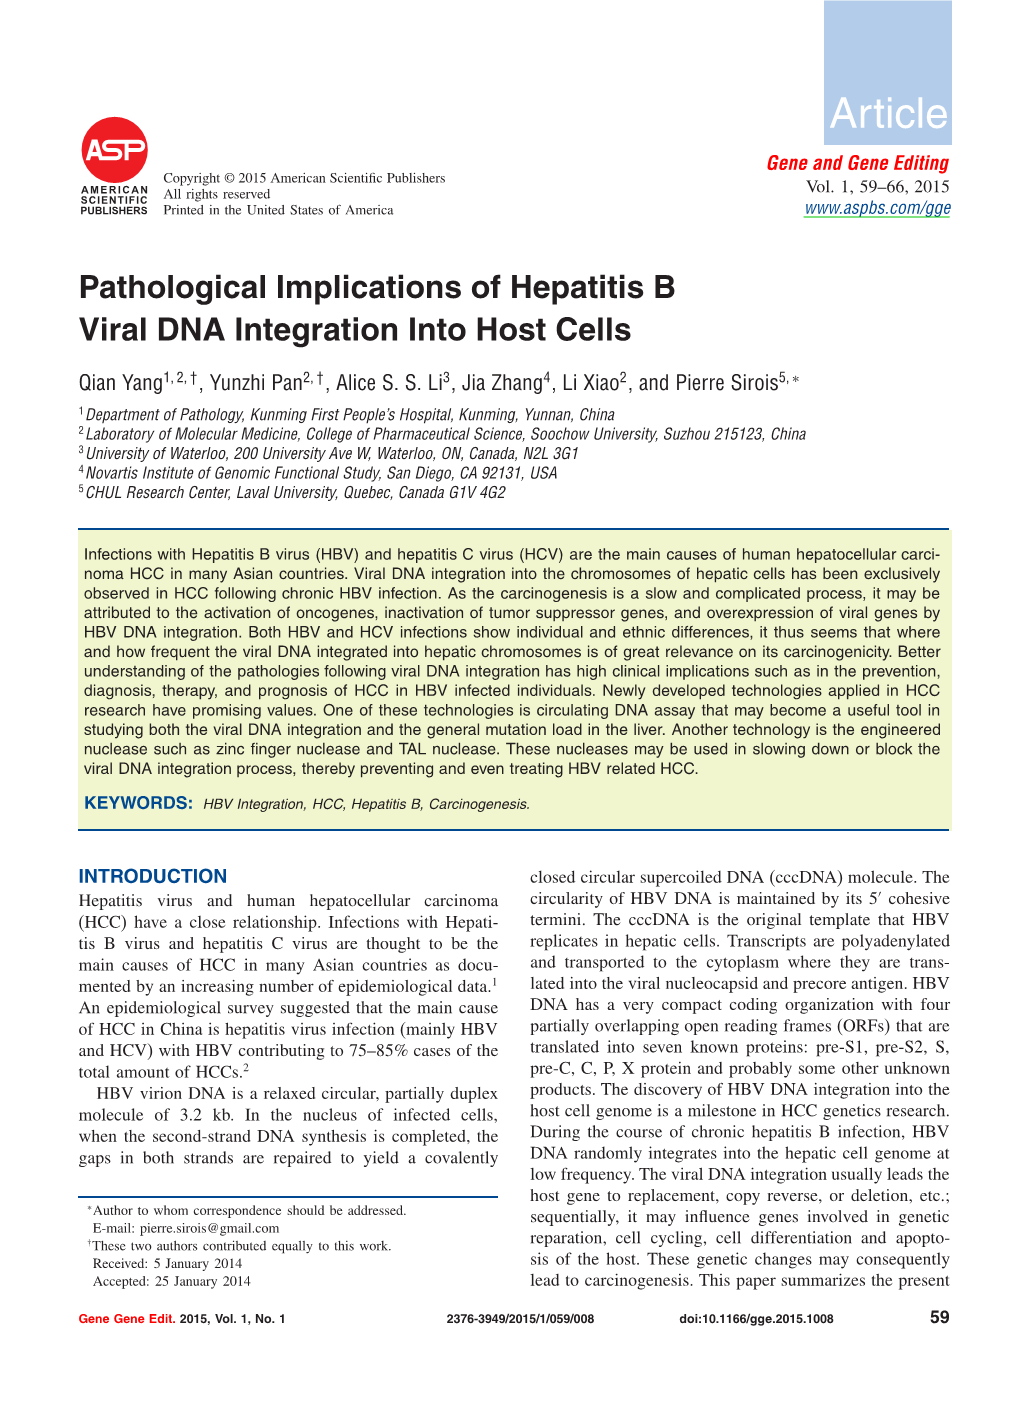 Pathological Implications of Hepatitis B Viral DNA Integration Into Host Cells